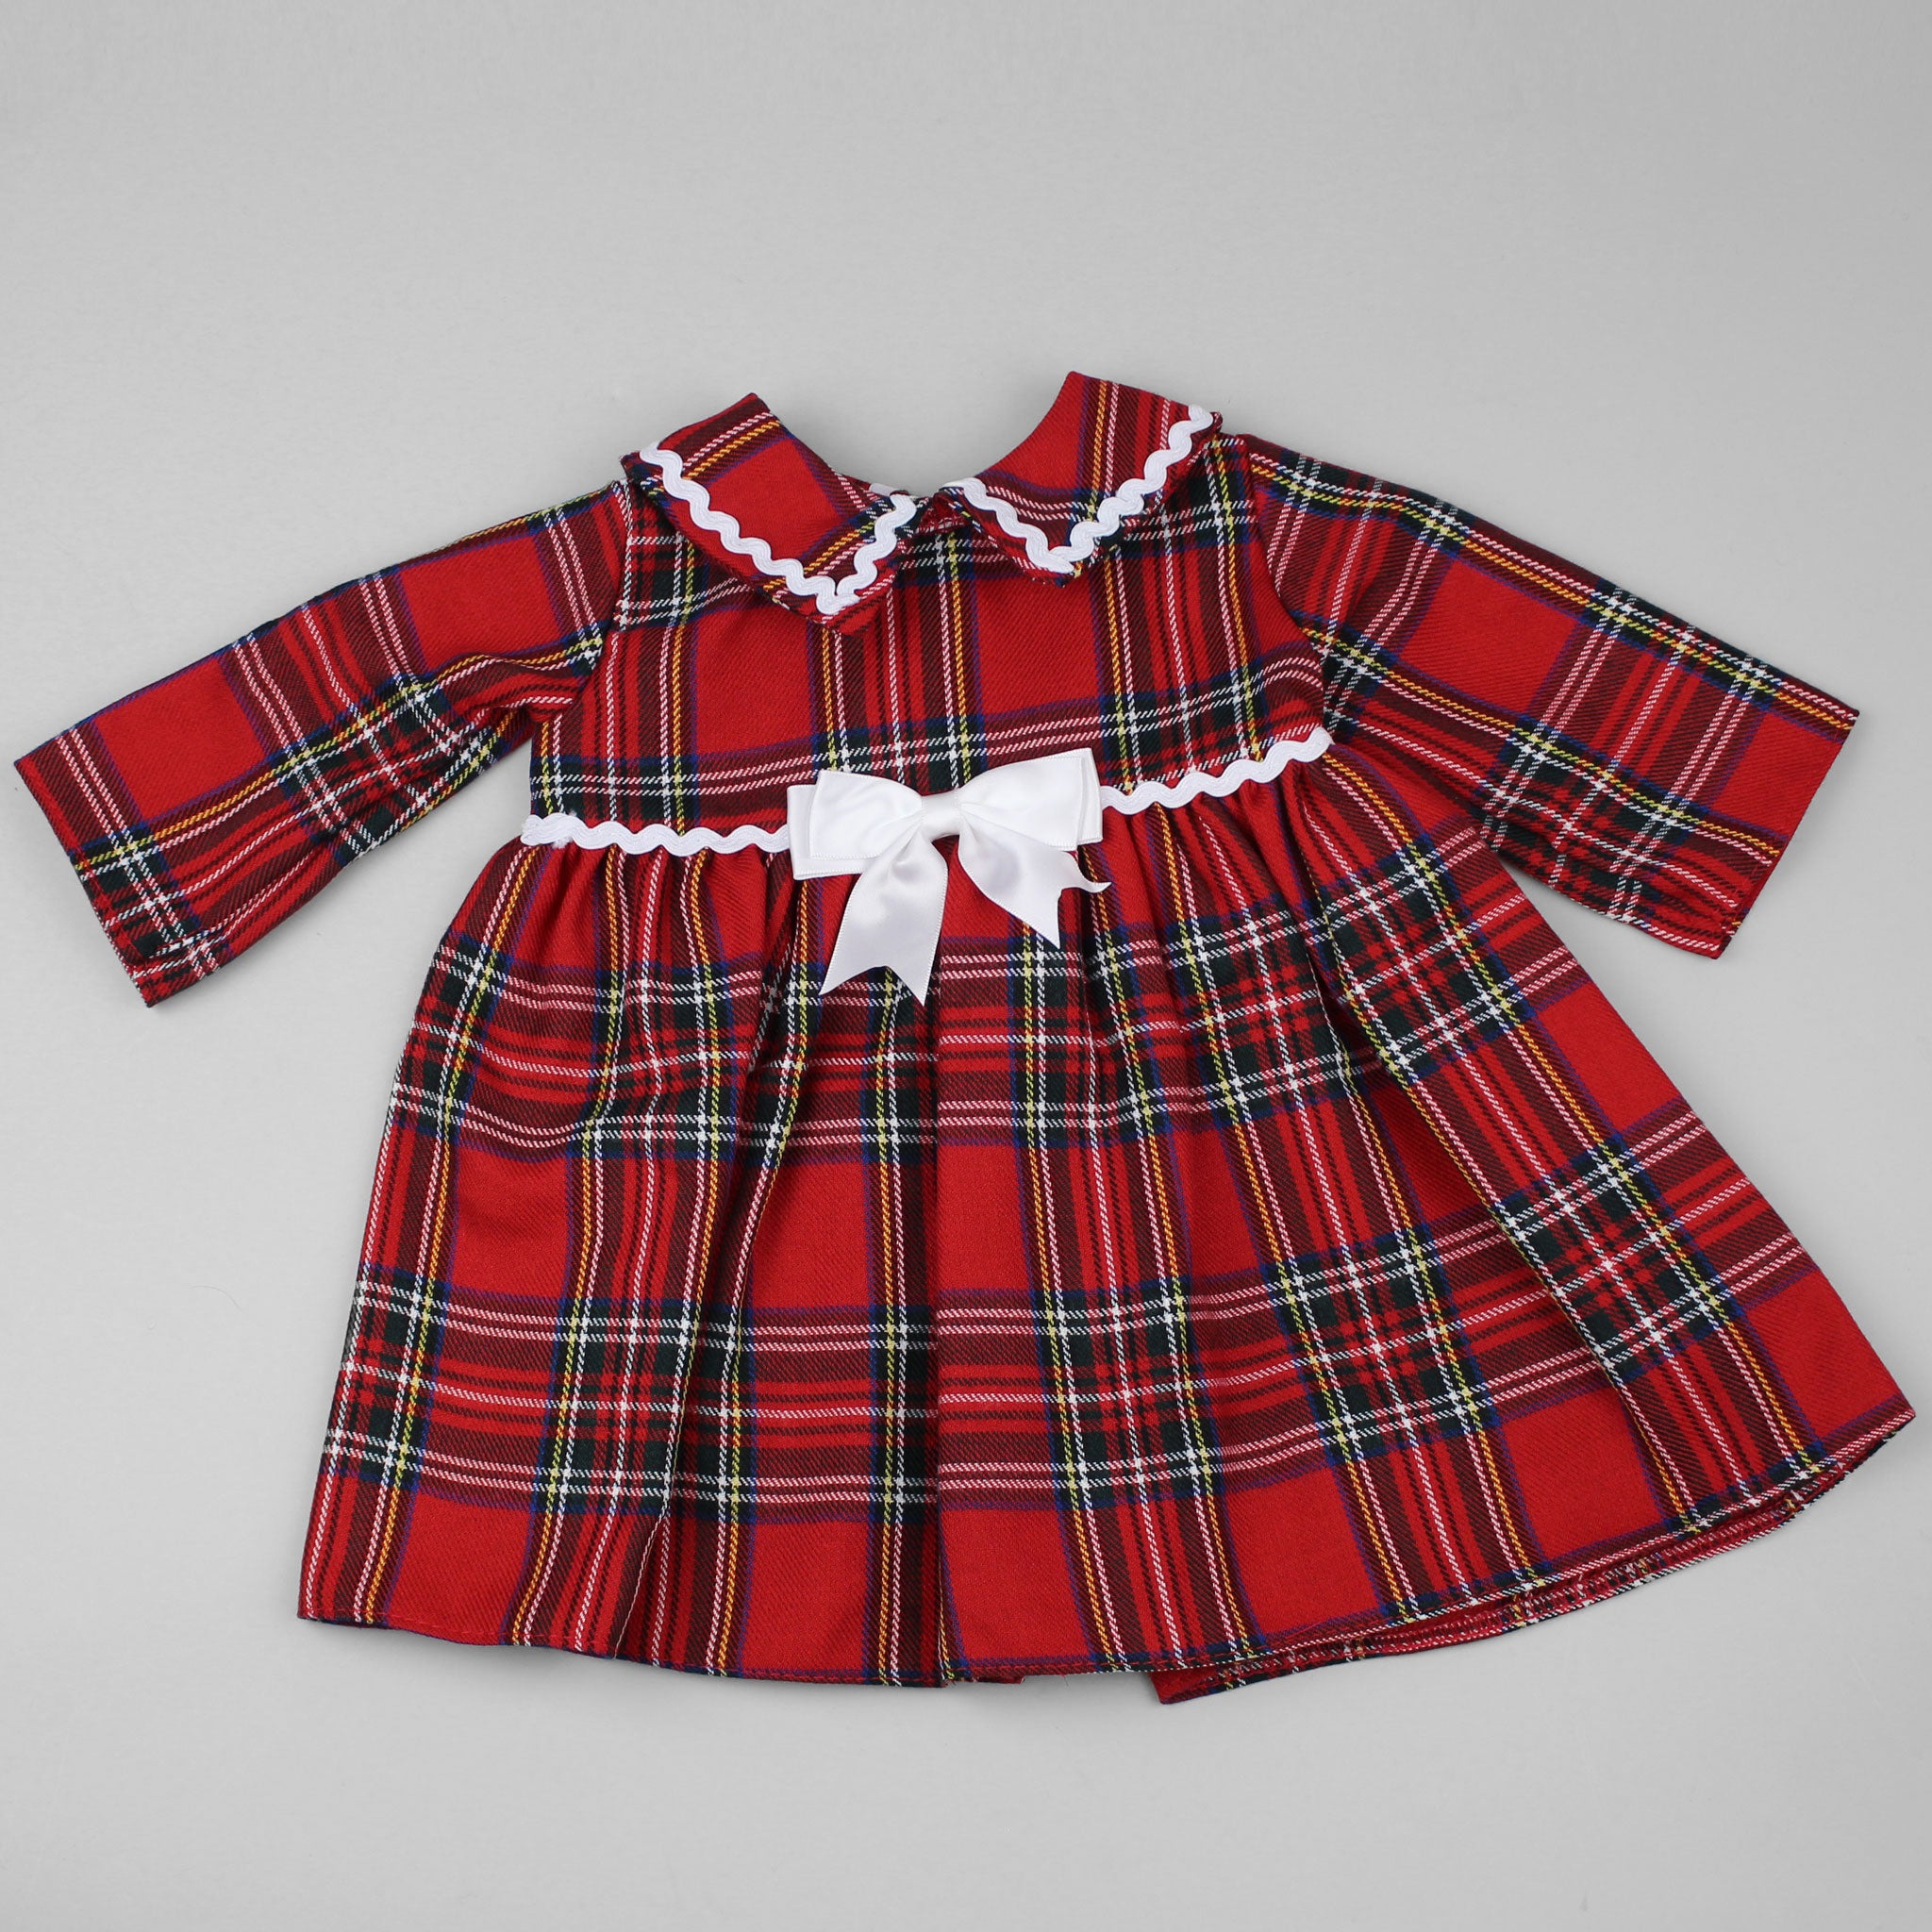 Red tartan baby dress